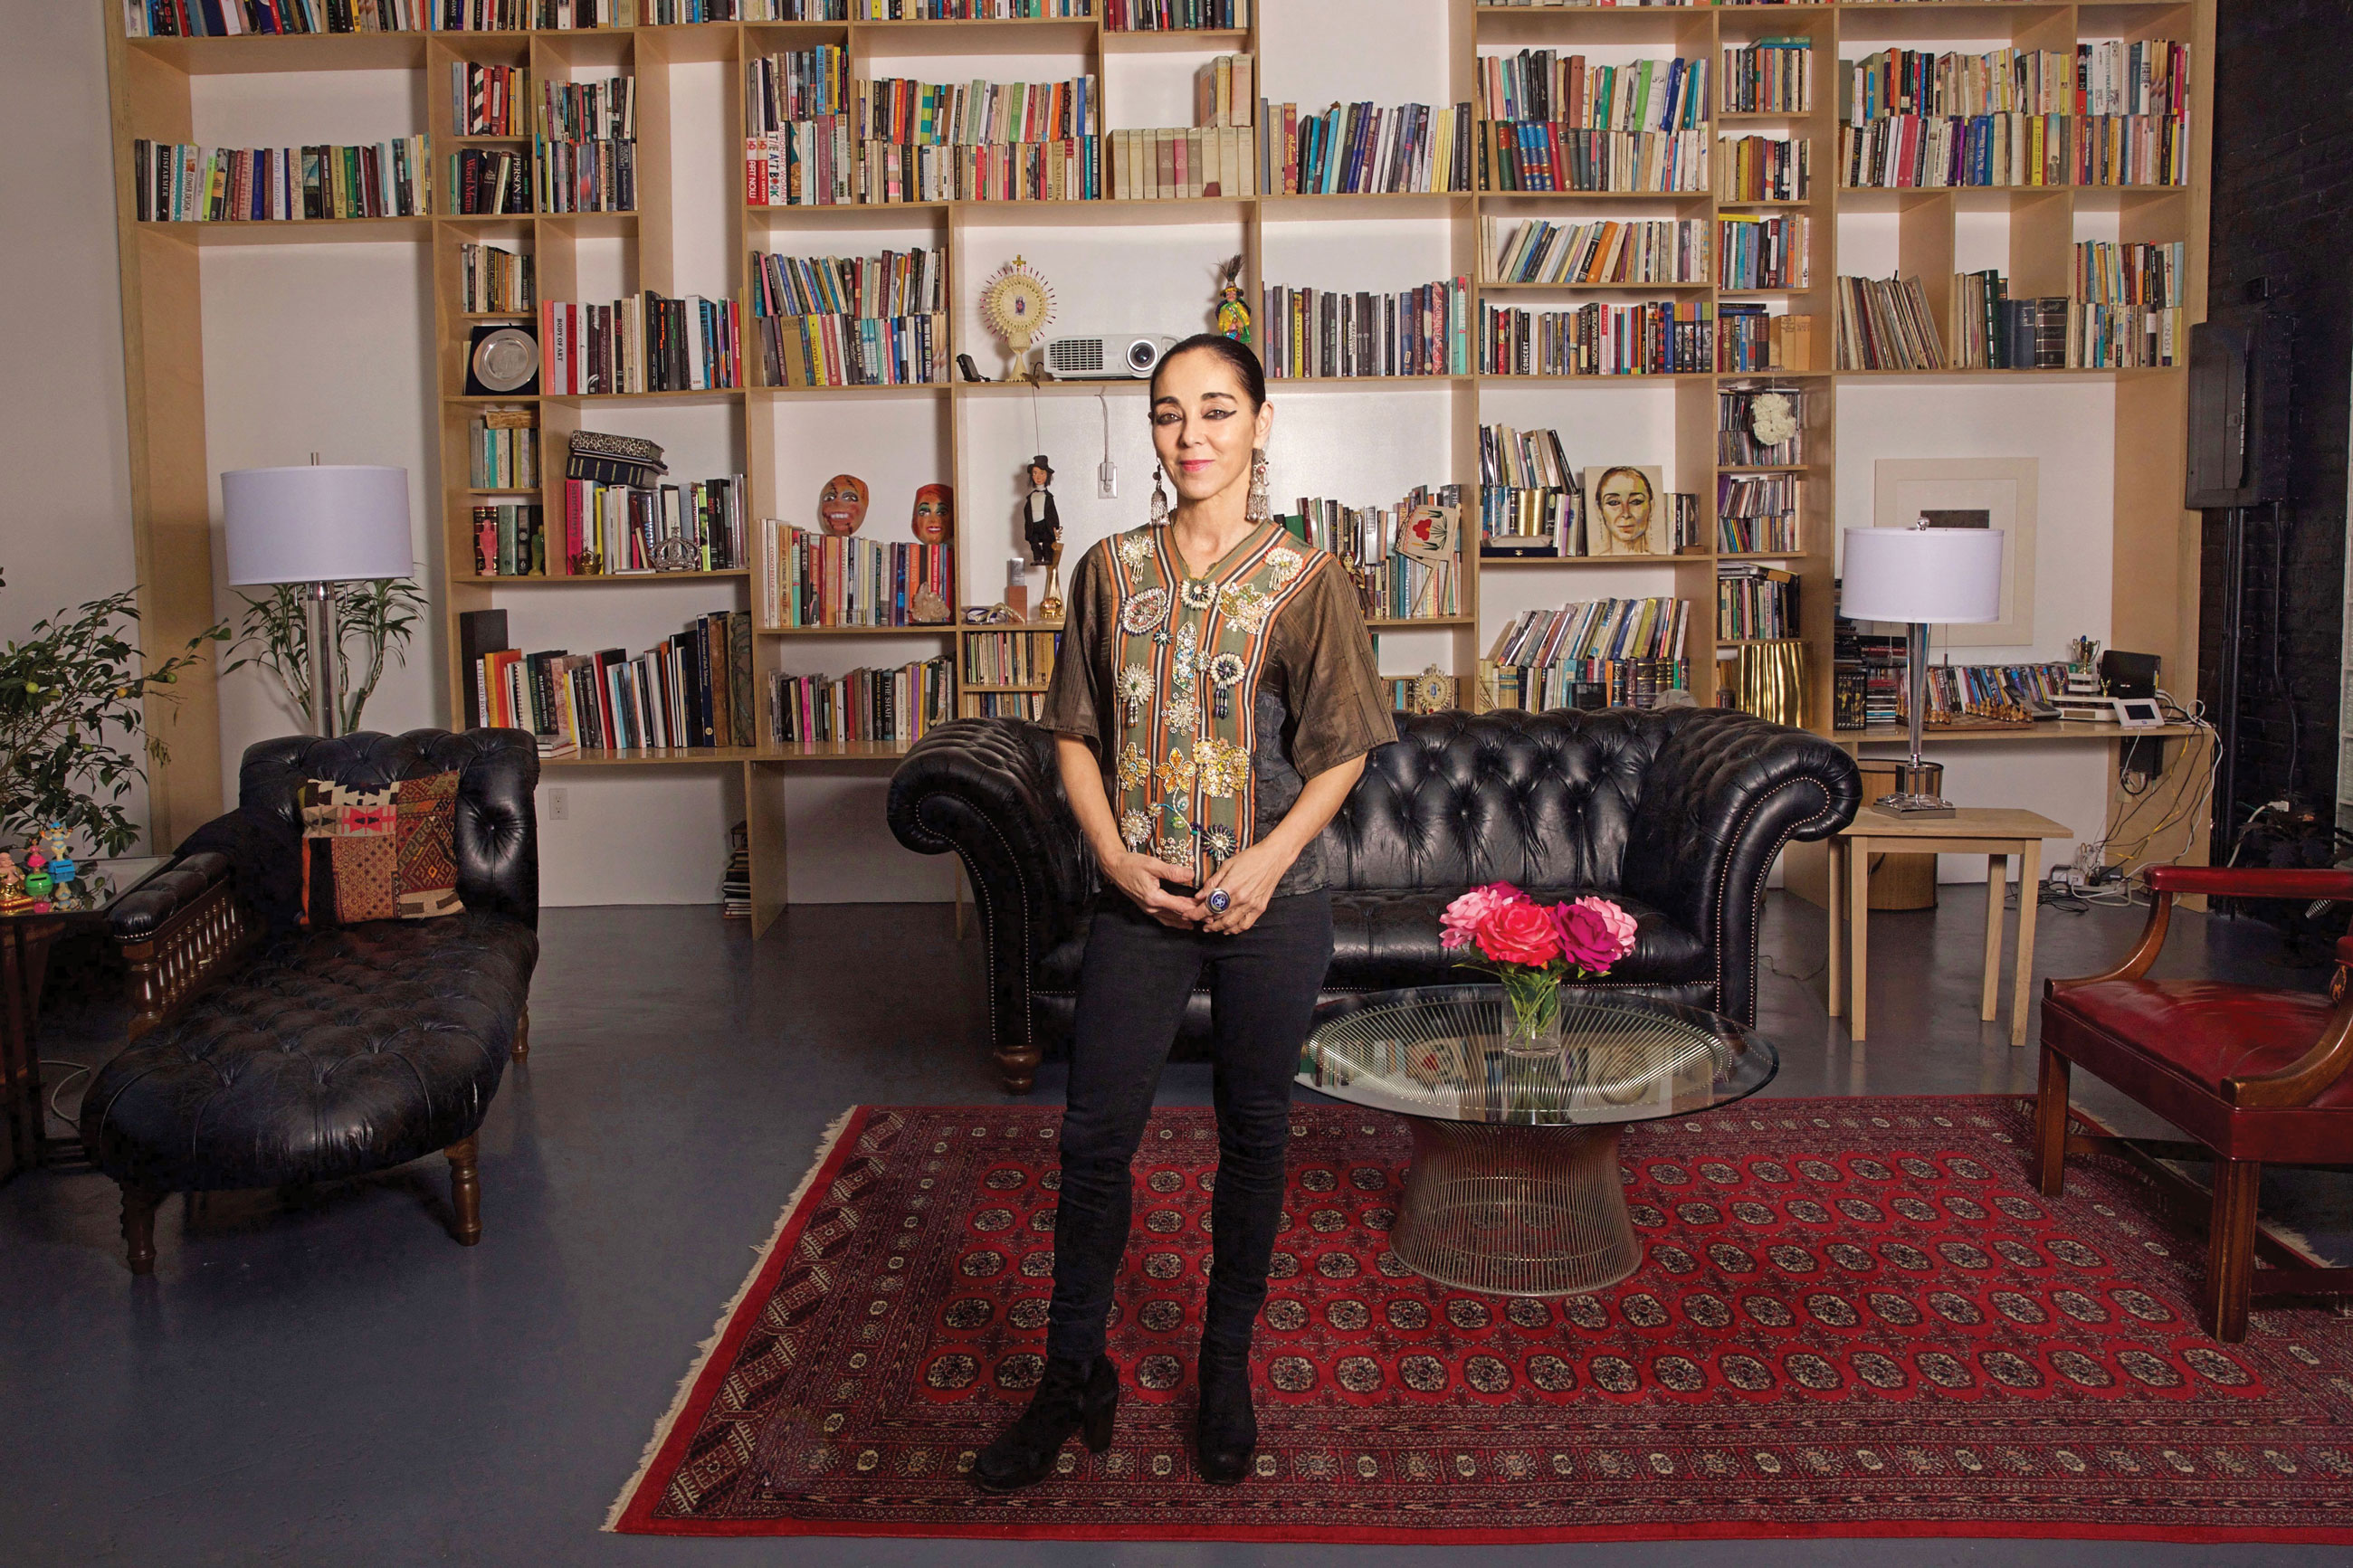 Groundbreaking artist Shirin Neshat in her New York home and studio, which she shares with her partner and collaborator, filmmaker Shoja Azari.